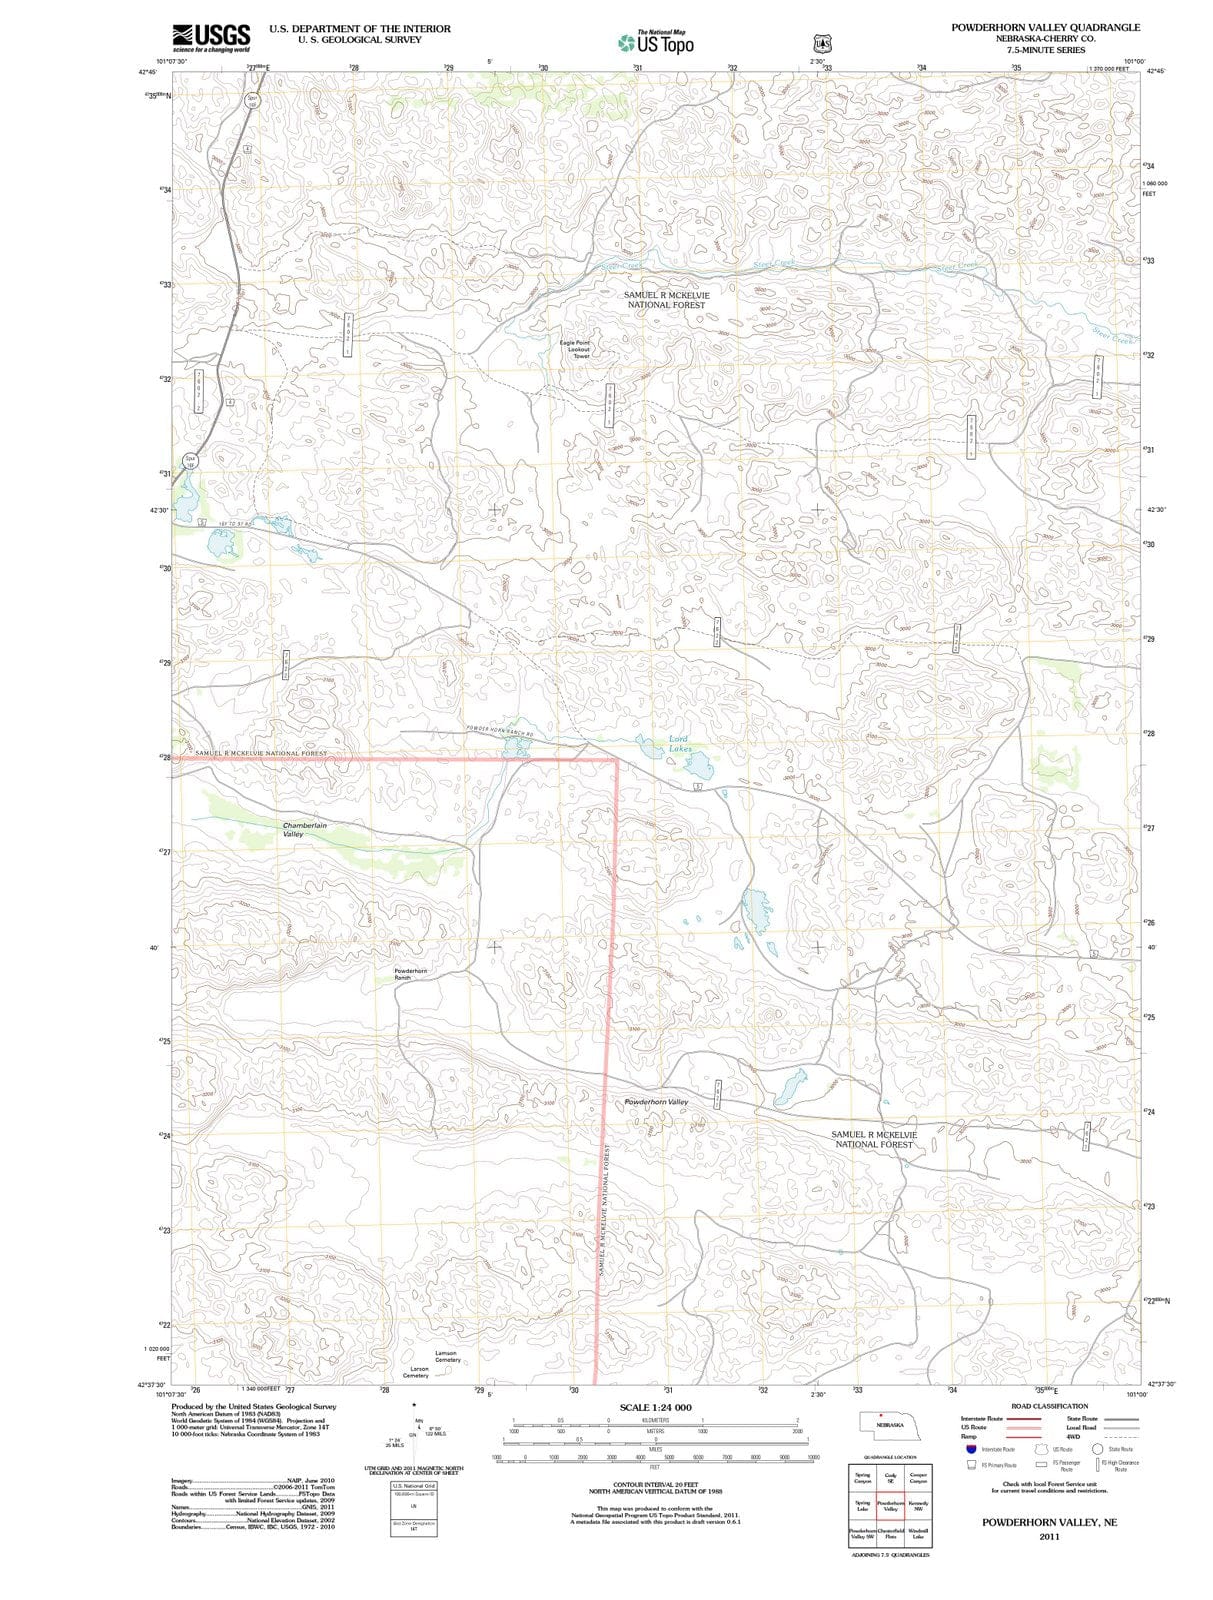 2011 Powderhorn Valley, NE - Nebraska - USGS Topographic Map